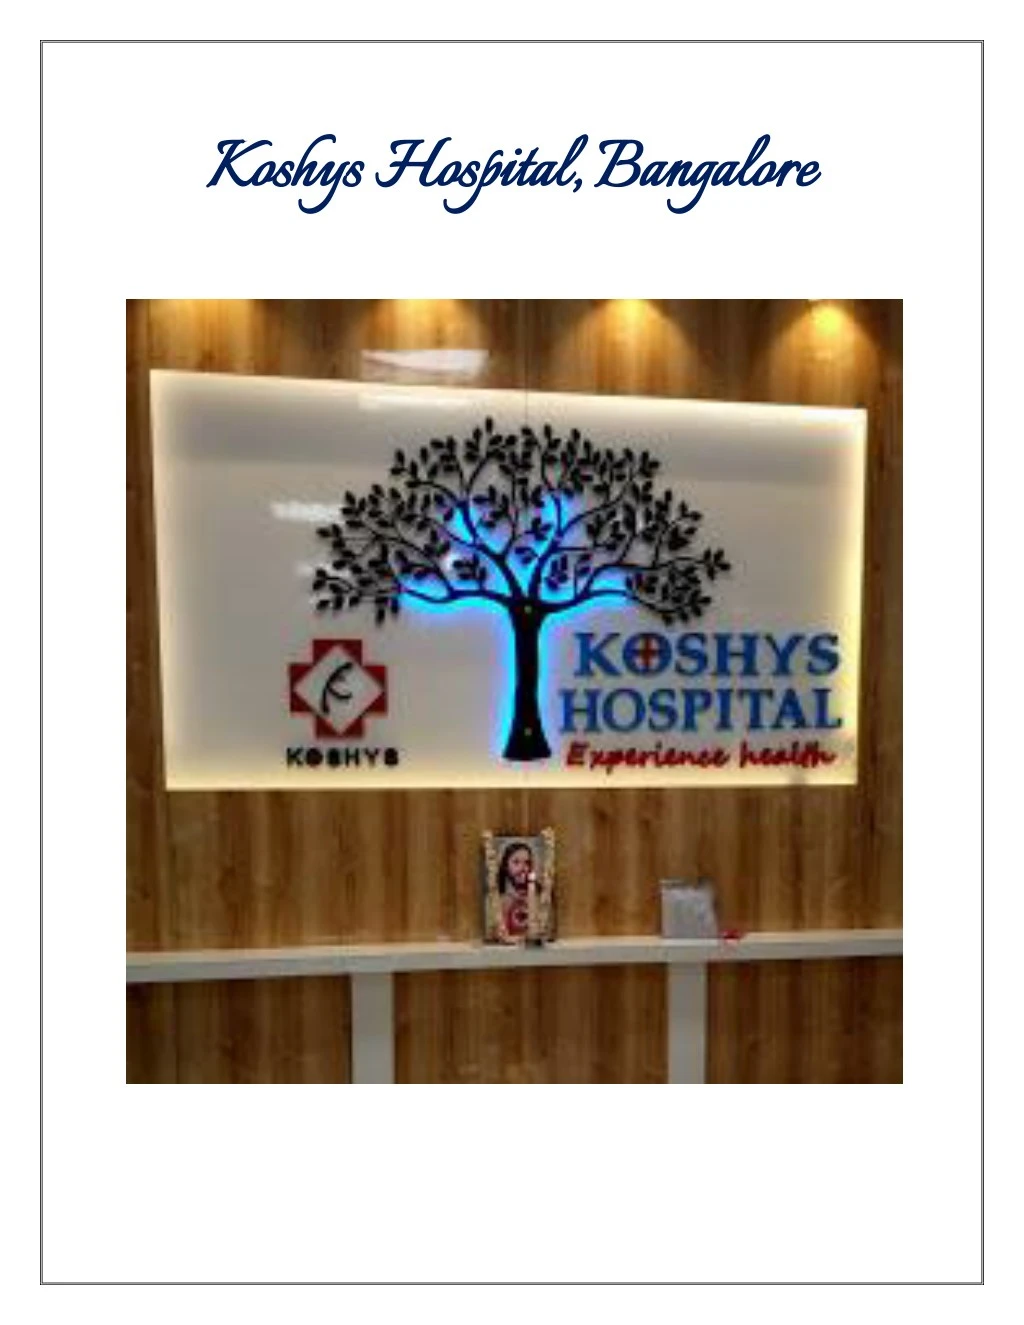 koshys koshys hospital hospital bangalore